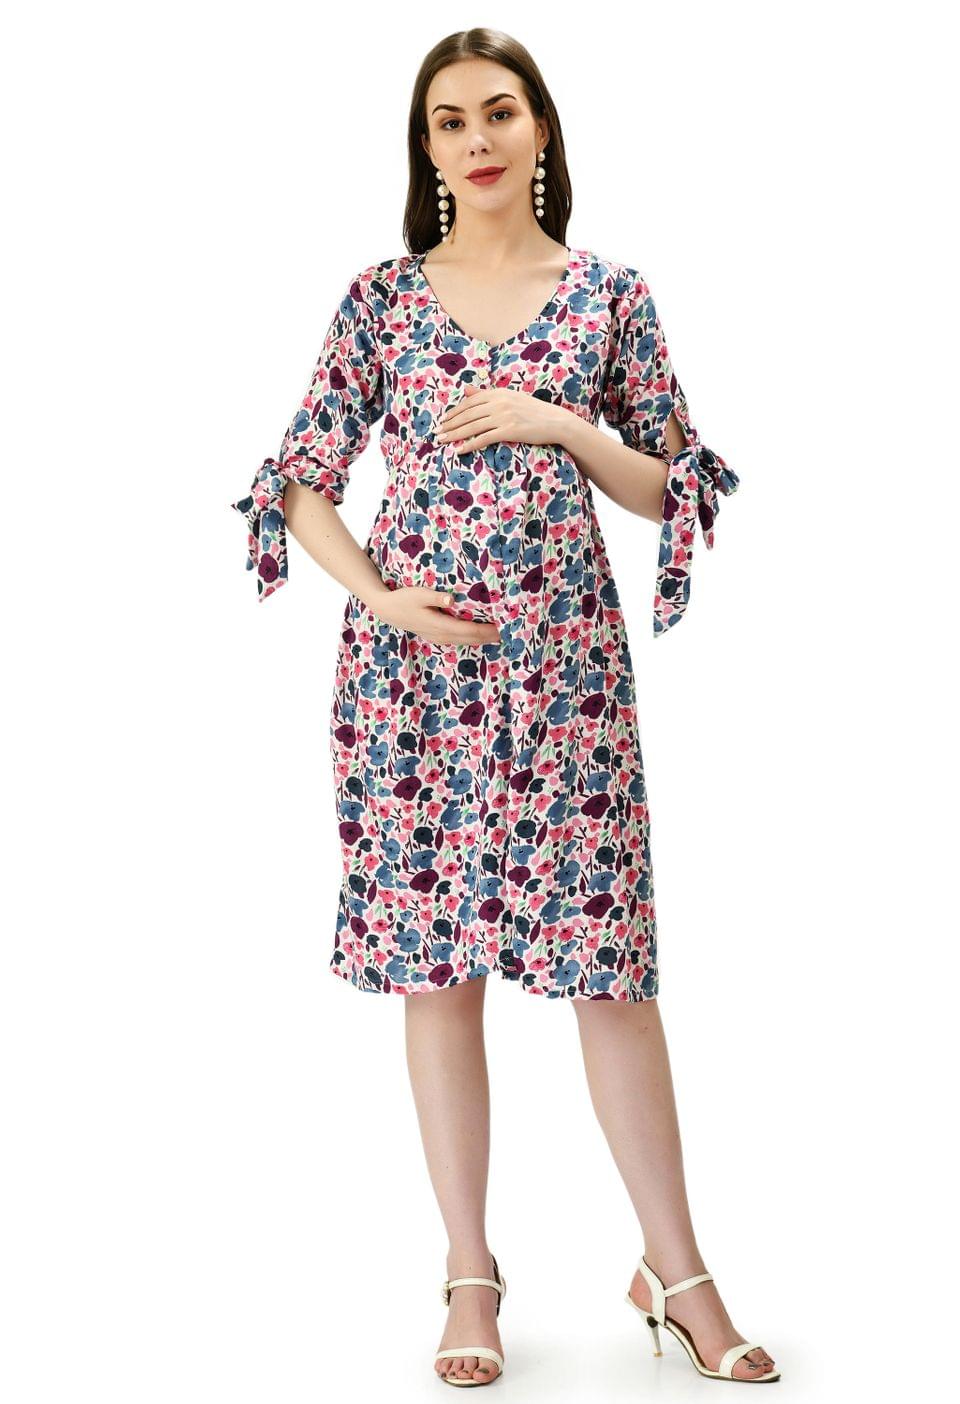 Mometernity Purple Floral Print Maternity and Nursing Tunic Dress